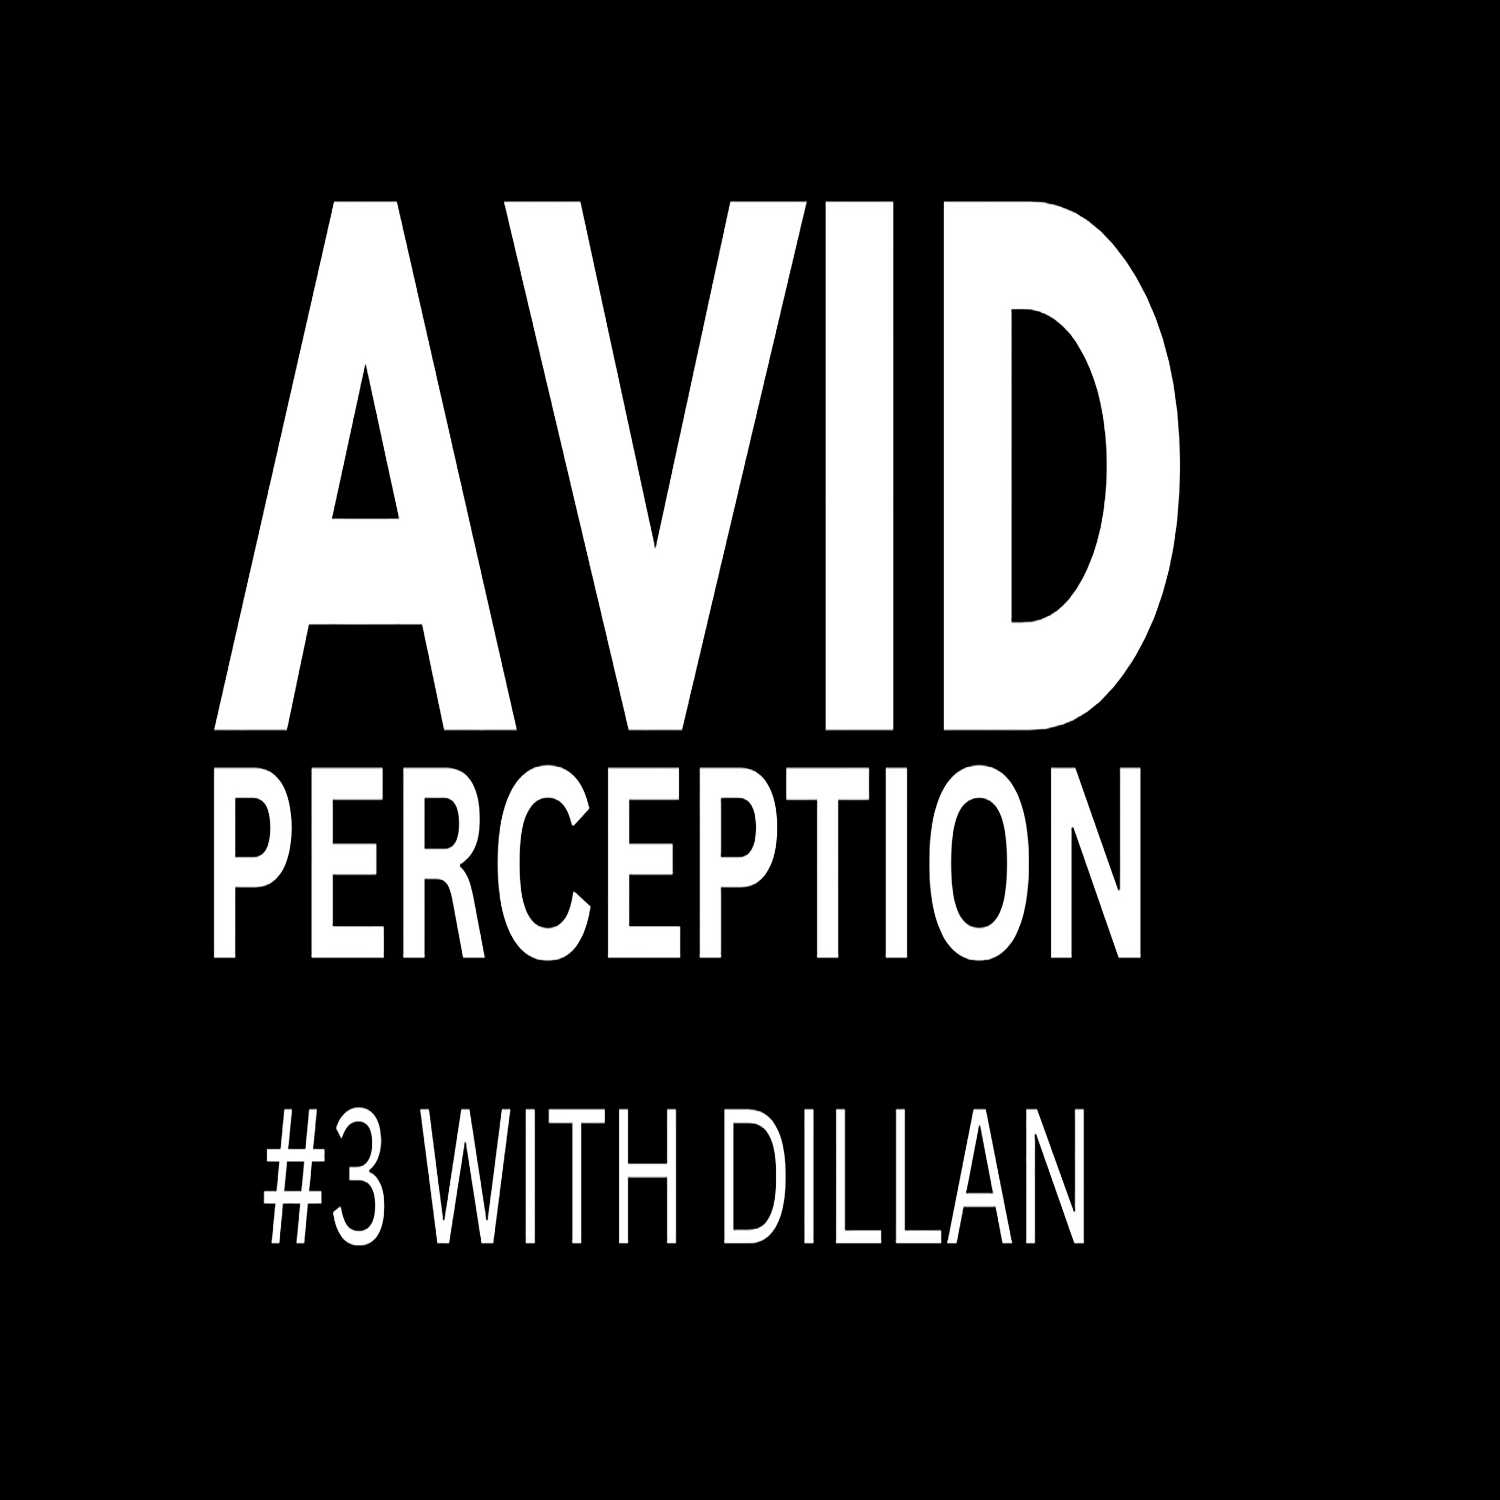 #3 - AVID PERCEPTION WITH DILLAN